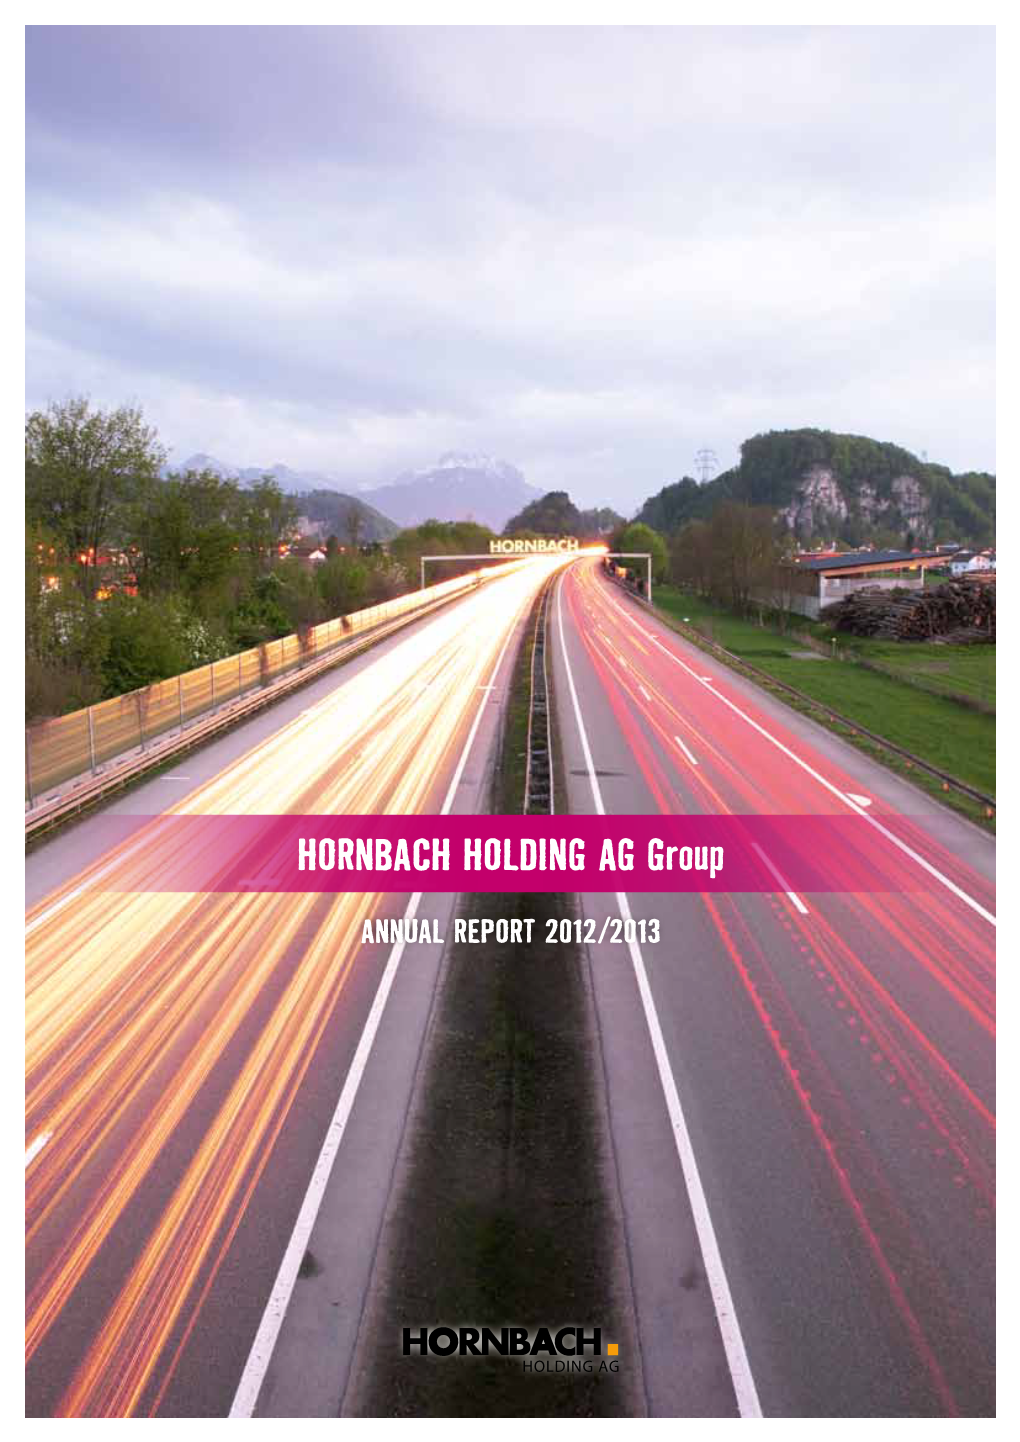 Hornbach Holding AG Group